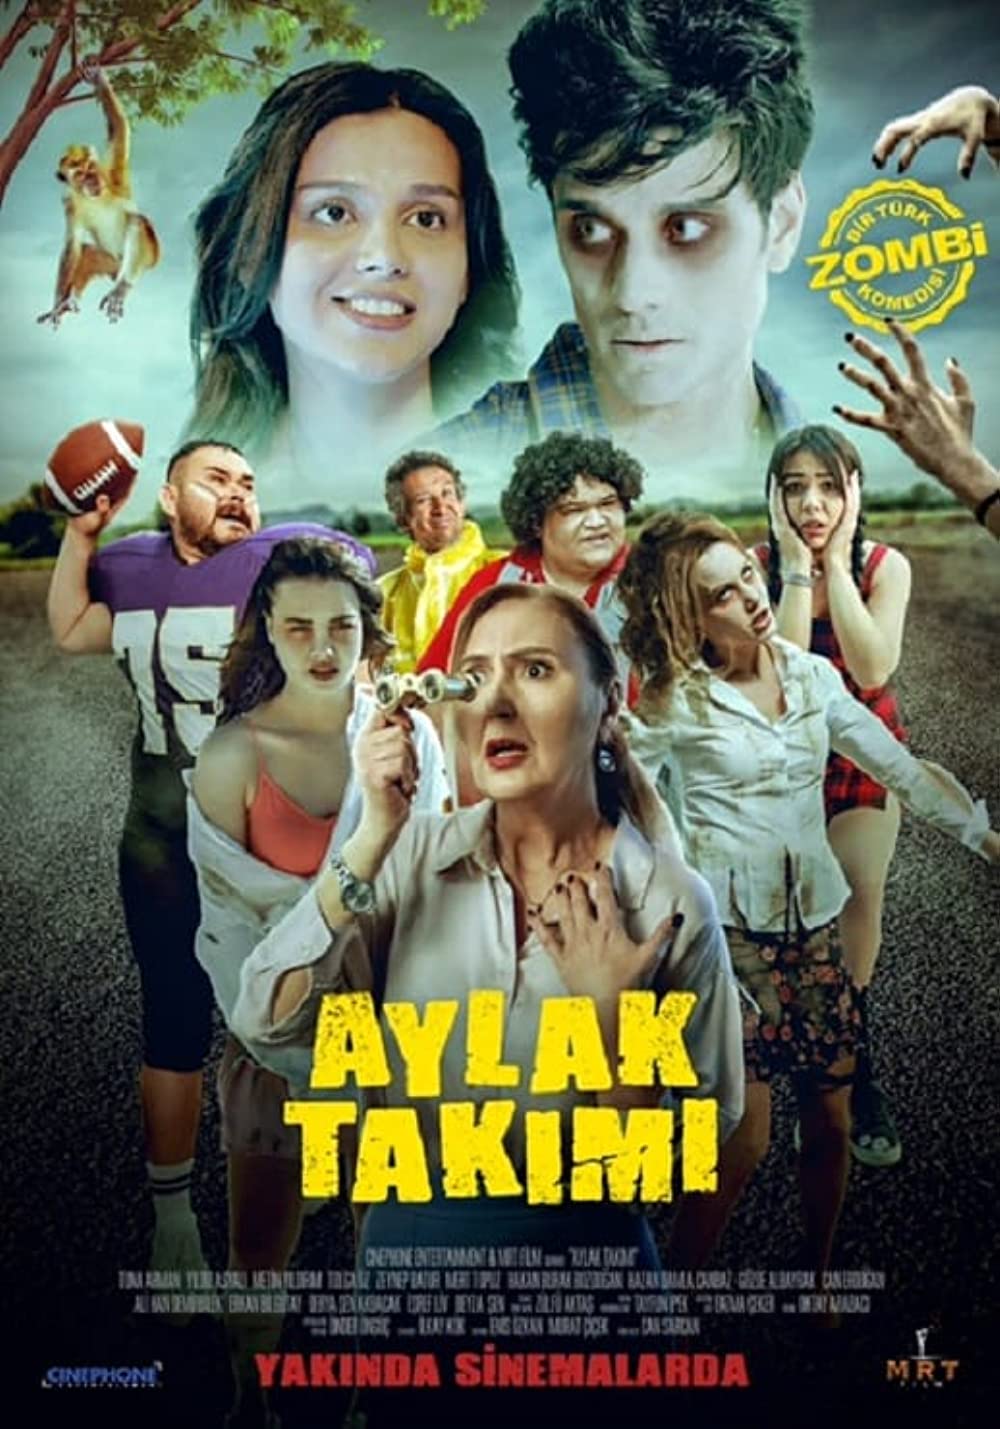 Filmbeschreibung zu Aylak Takimi (OV)